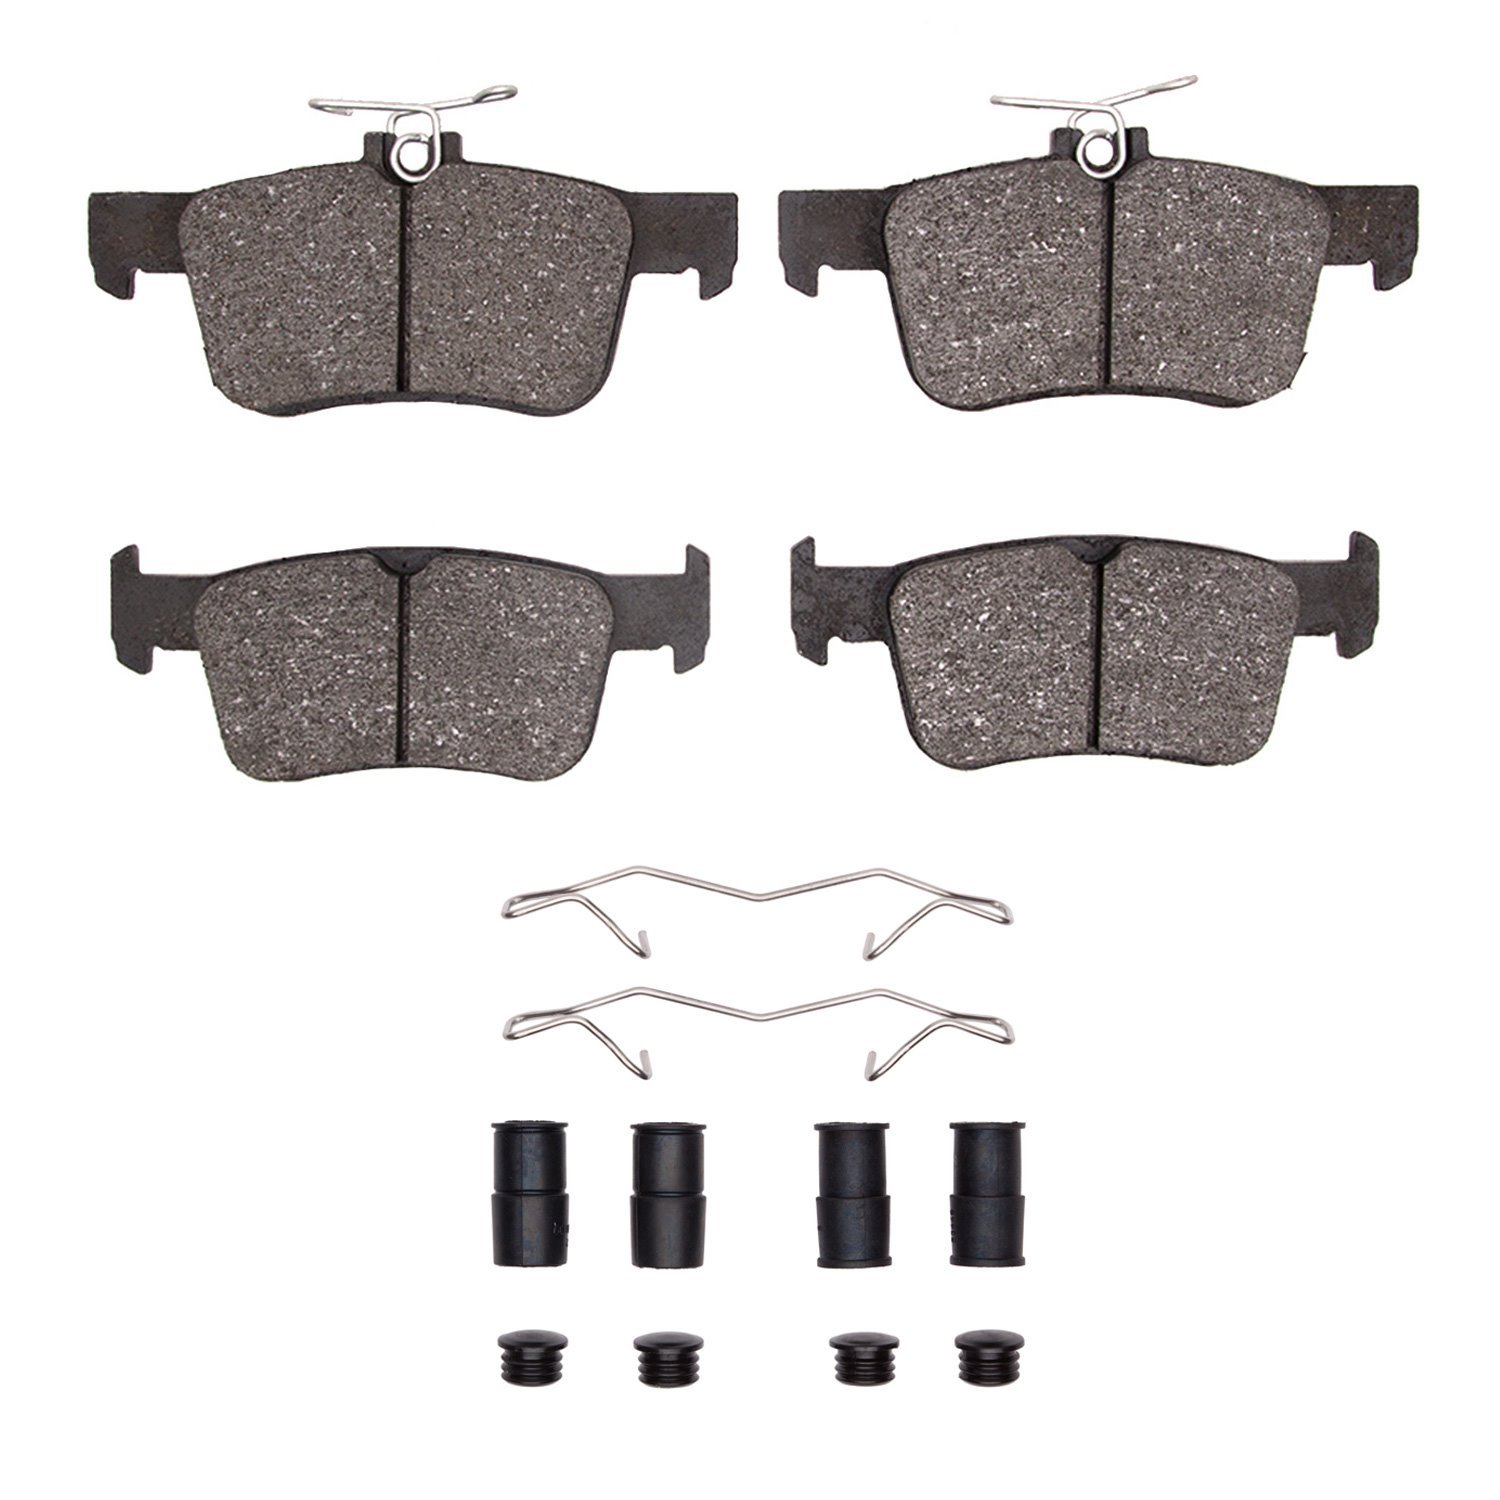 1551-2102-01 5000 Advanced Ceramic Brake Pads & Hardware Kit, Fits Select Acura/Honda, Position: Rear